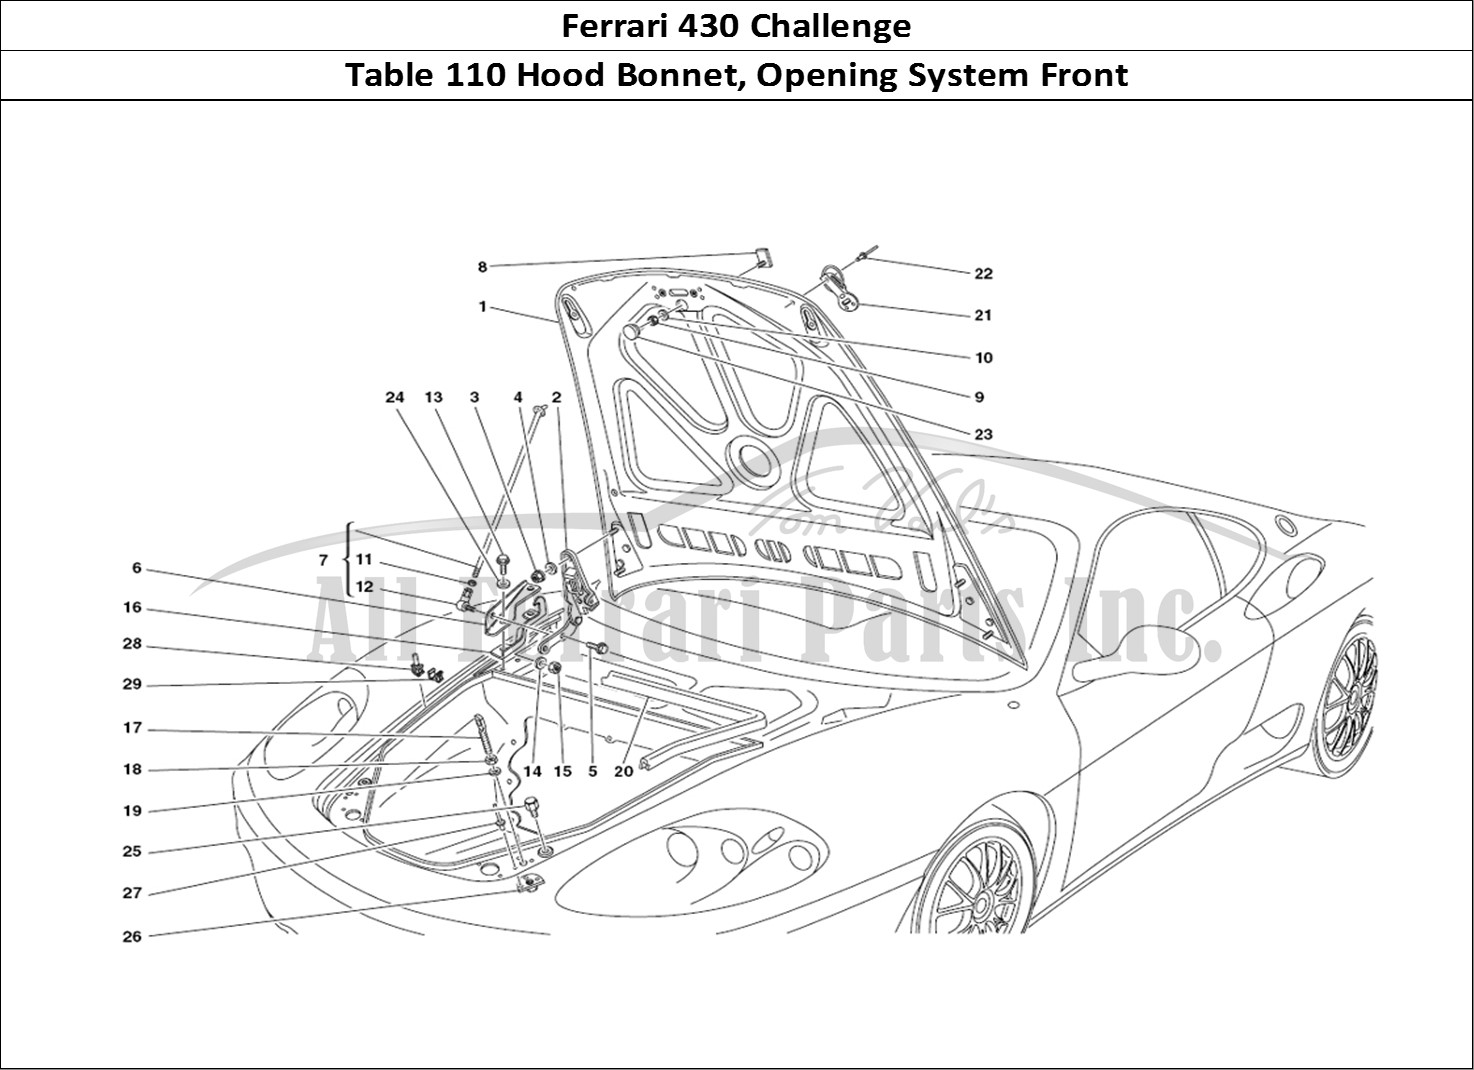 Ferrari Parts Ferrari 430 Challenge (2006) Page 110 Front Hood & Opening Devi